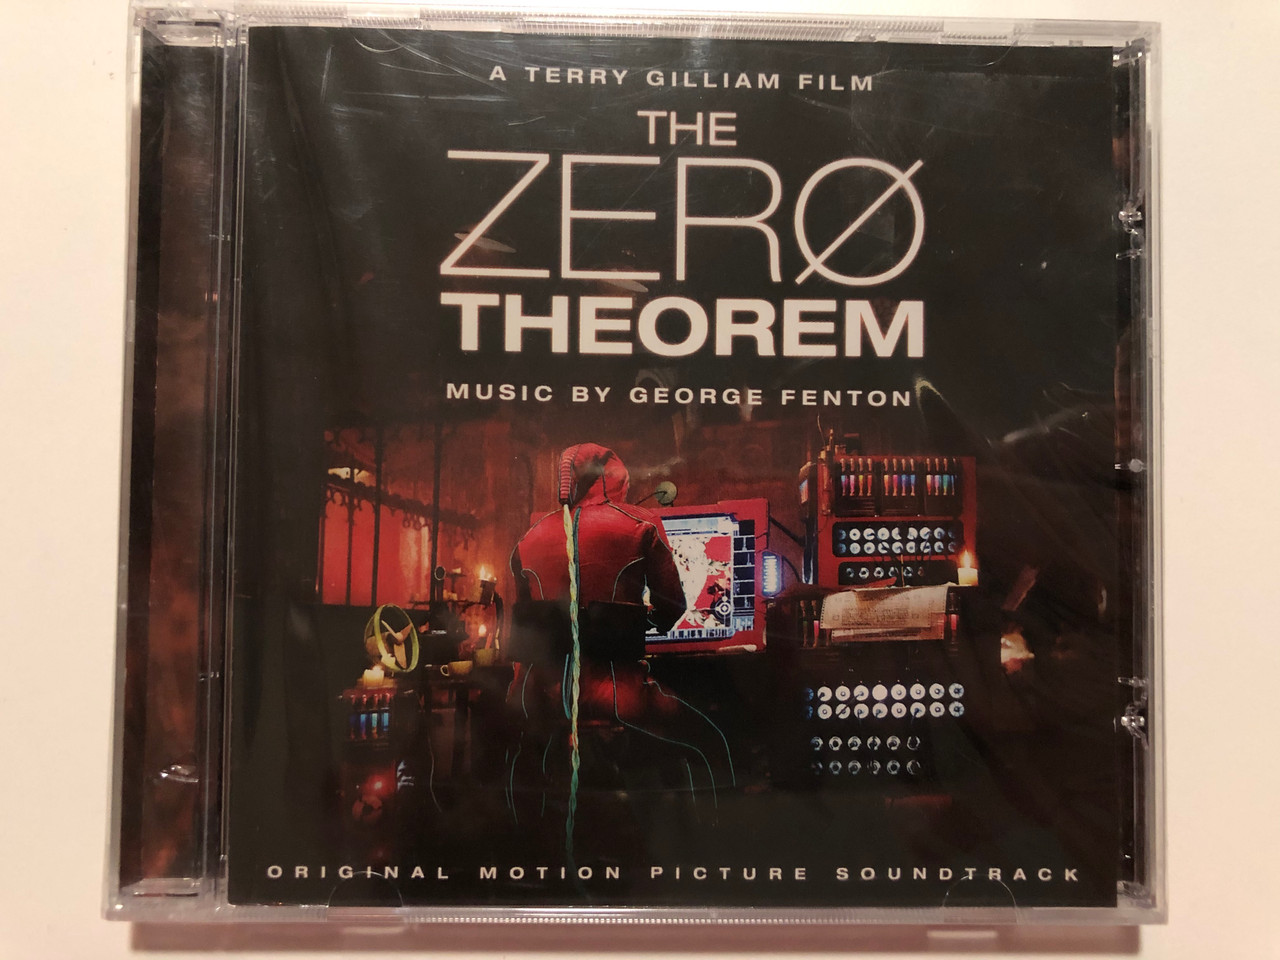 The Zero Theorem (Original Motion Picture Soundtrack) (Album) album cover A  Terry Gilliam Film – The Zero Theorem - Music by George Fenton / Original  Motion Picture Soundtrack / Milan Audio CD 2013 / 399 530-2 -  bibleinmylanguage